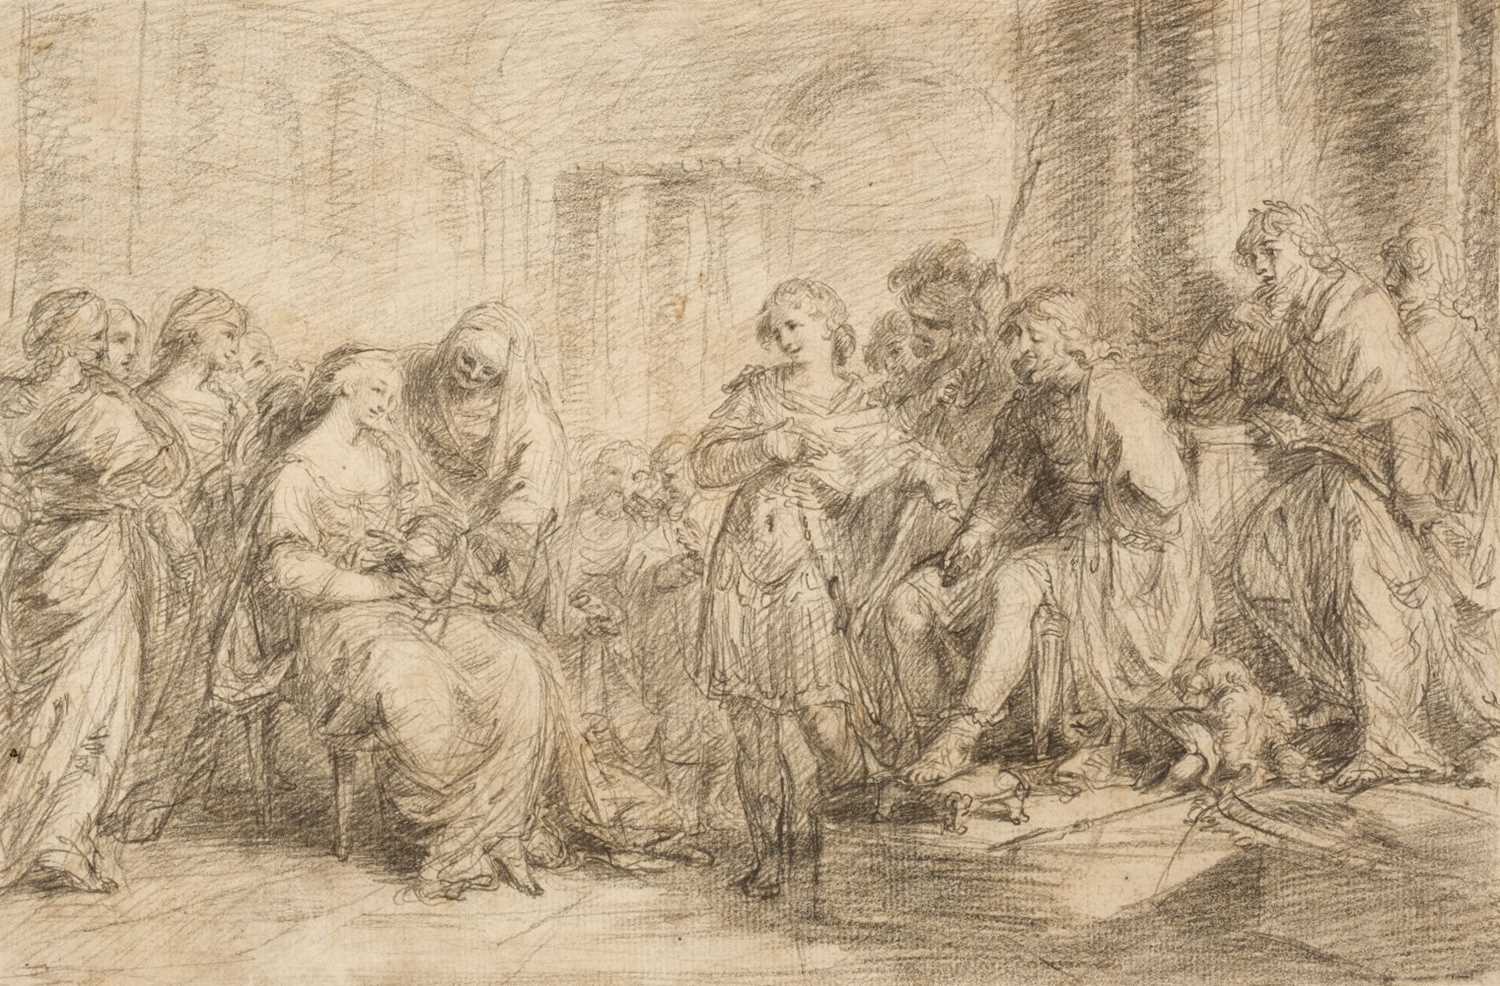 Lot 42 - Attributed to Benjamin West (1738-1820). Betrothal Scene, black chalk, circa 1799